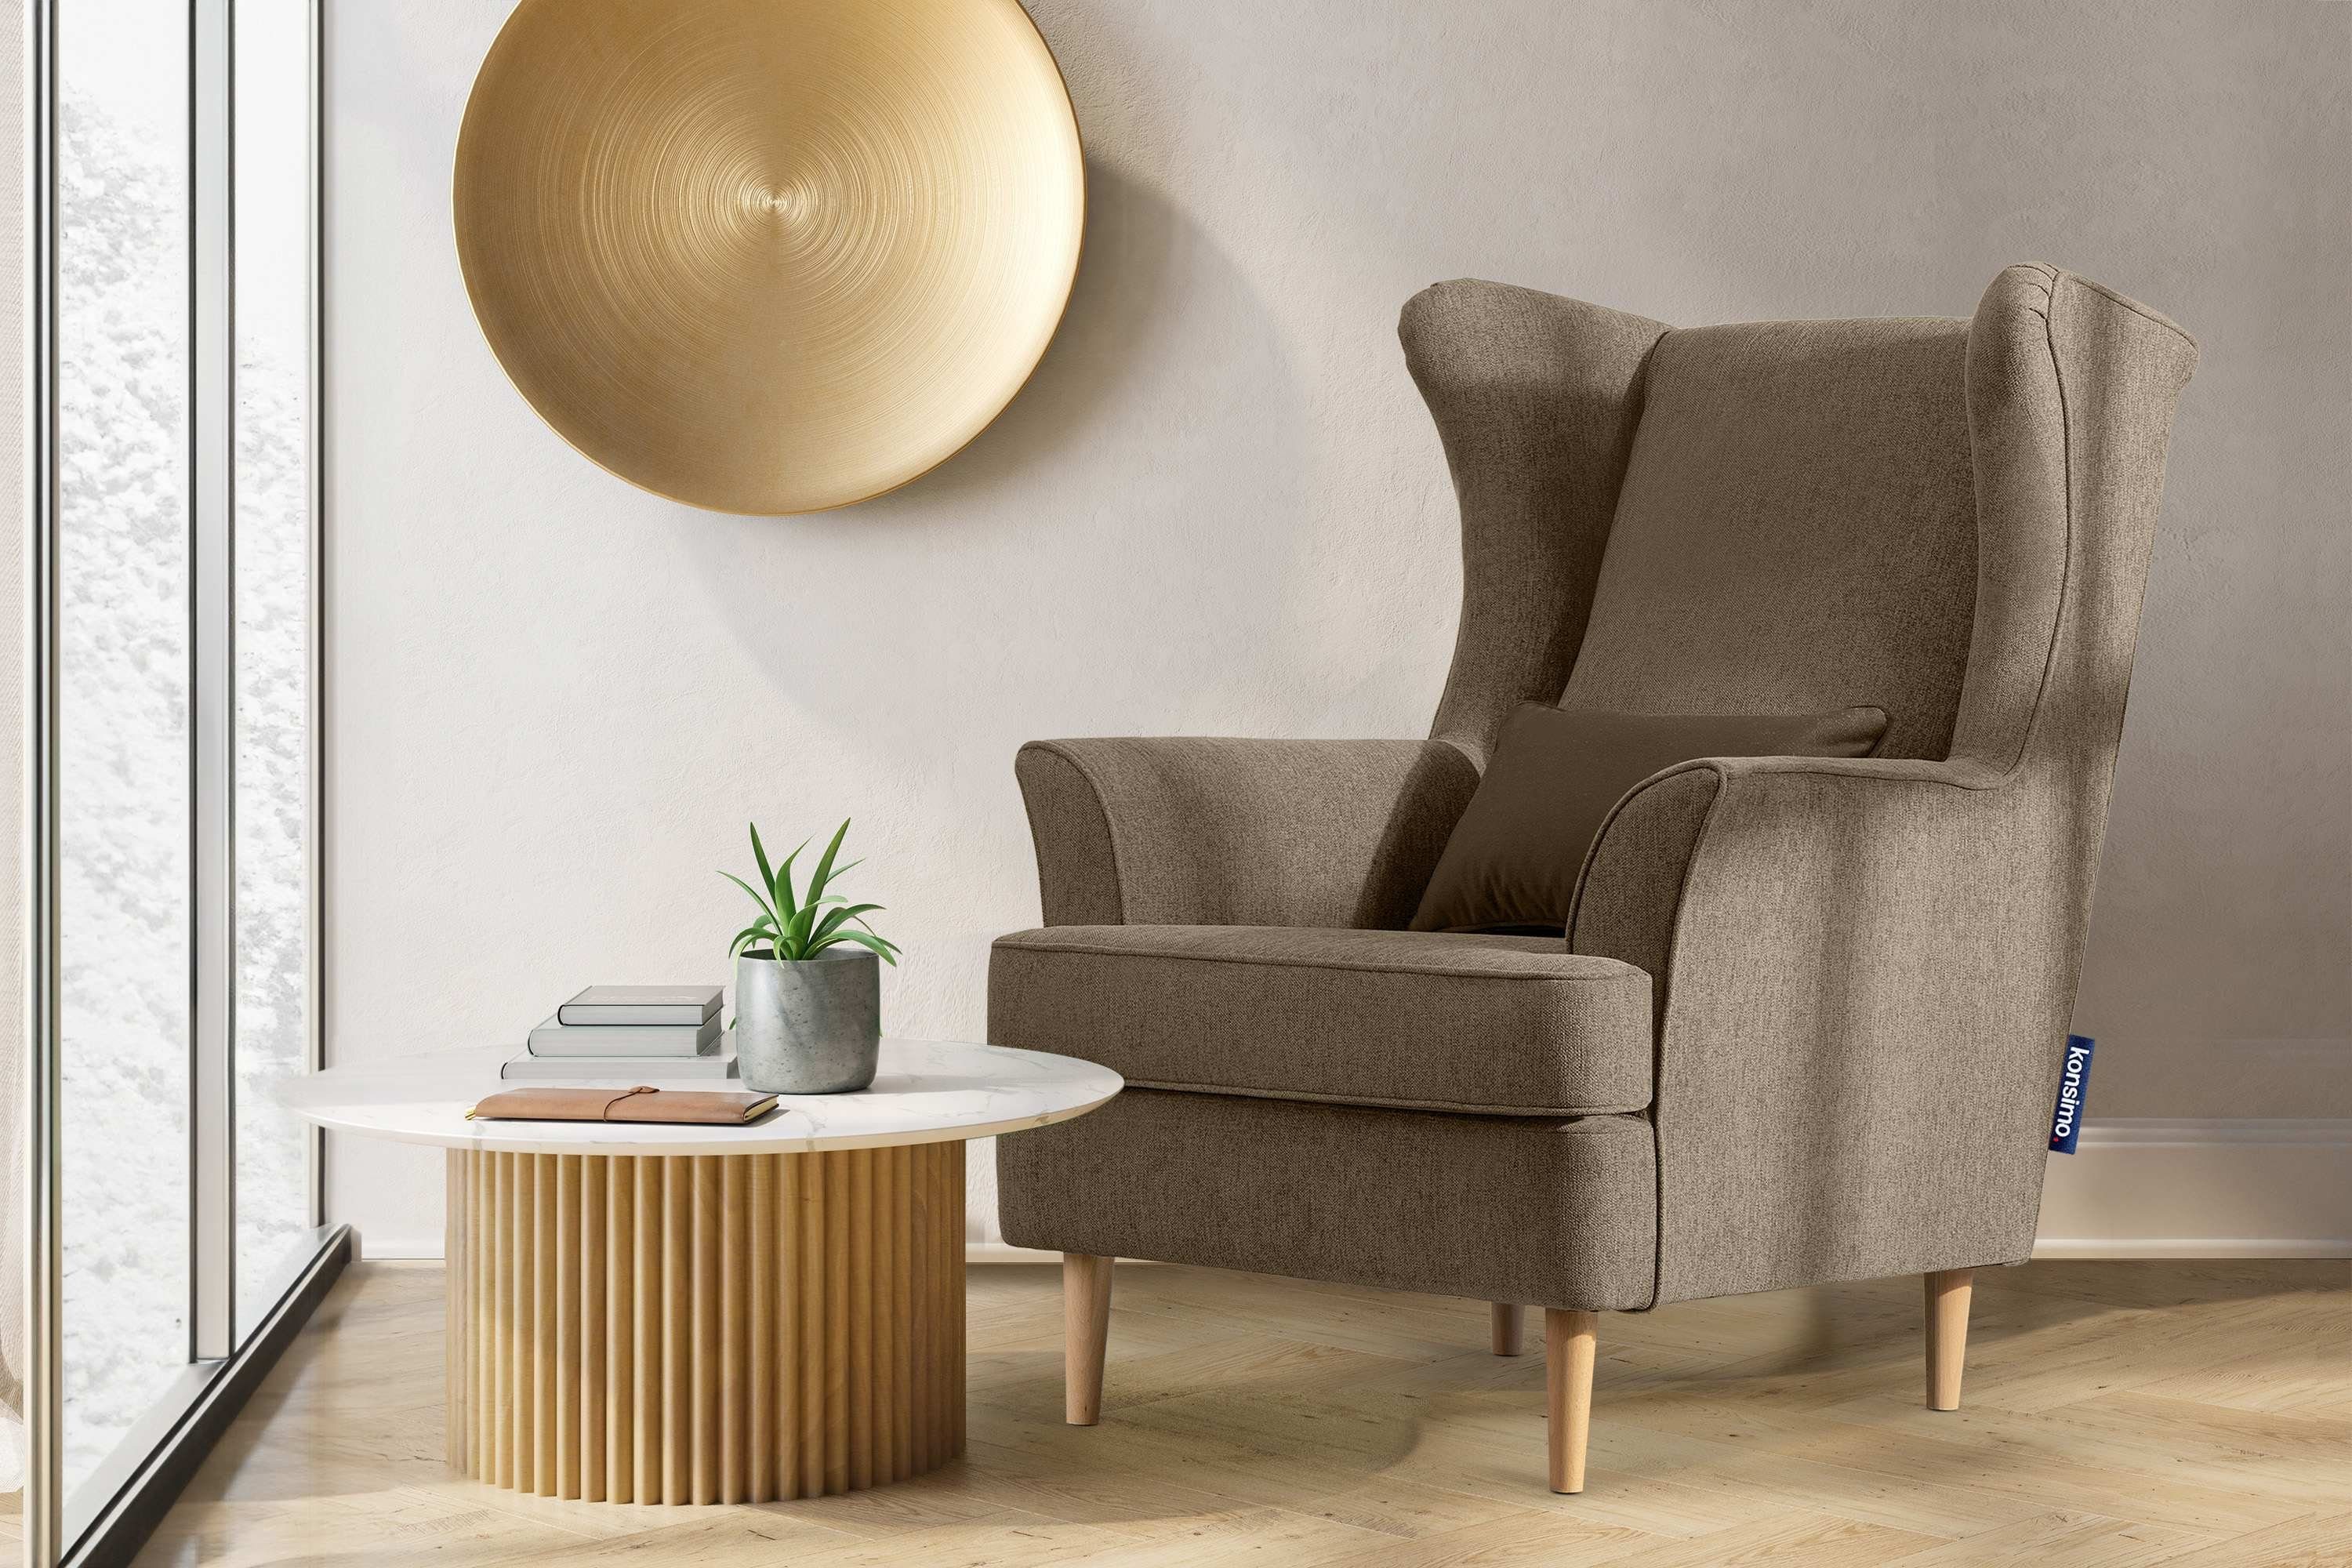 Konsimo Ohrensessel STRALIS Sessel, Füße, hohe inklusive Kissen zeitloses Design, dekorativem